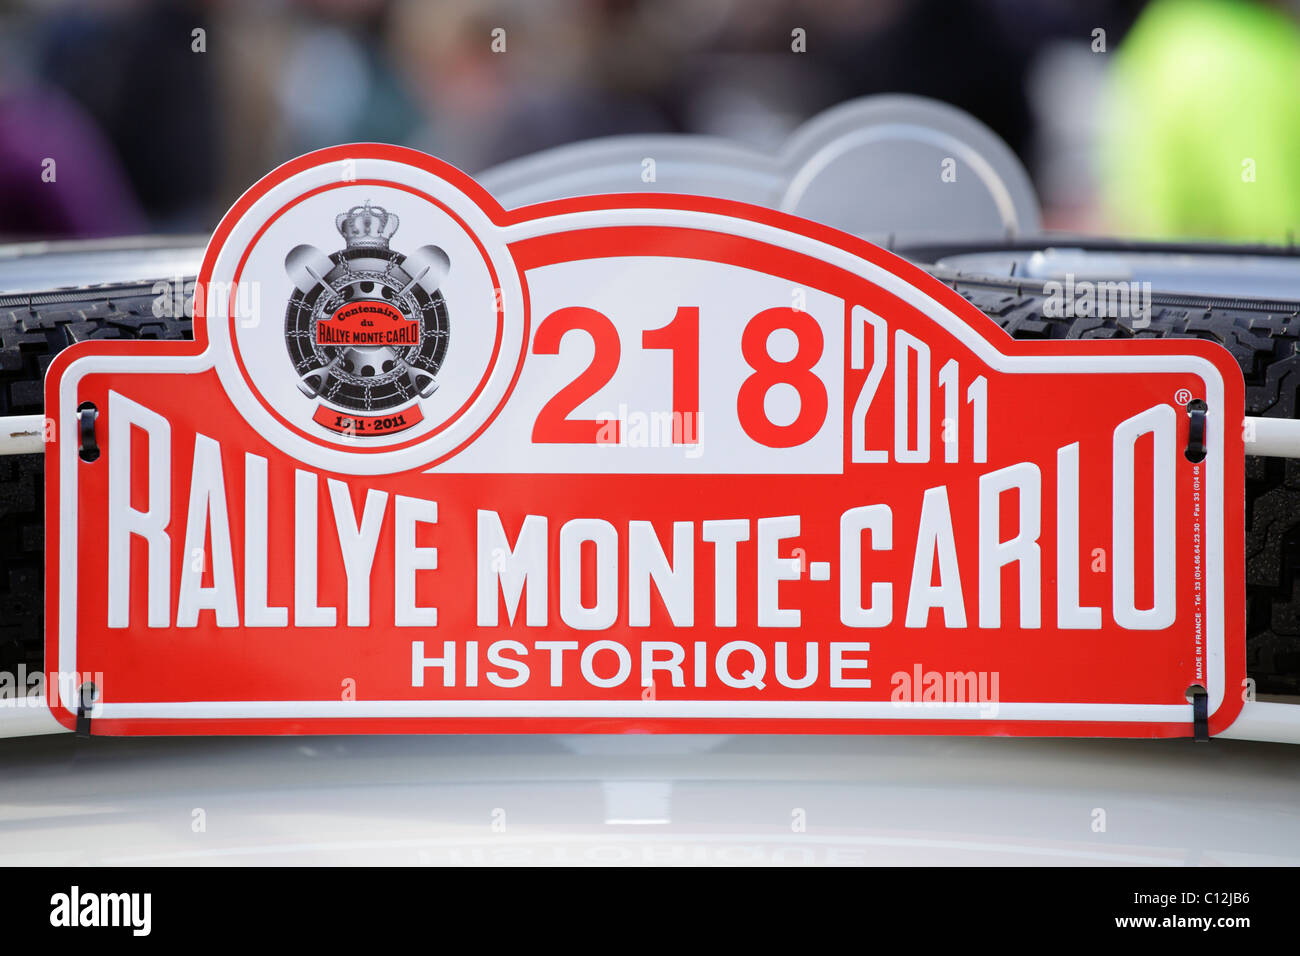 Monte Carlo Rallye centenary plate 1911 - 2011, UK Stock Photo